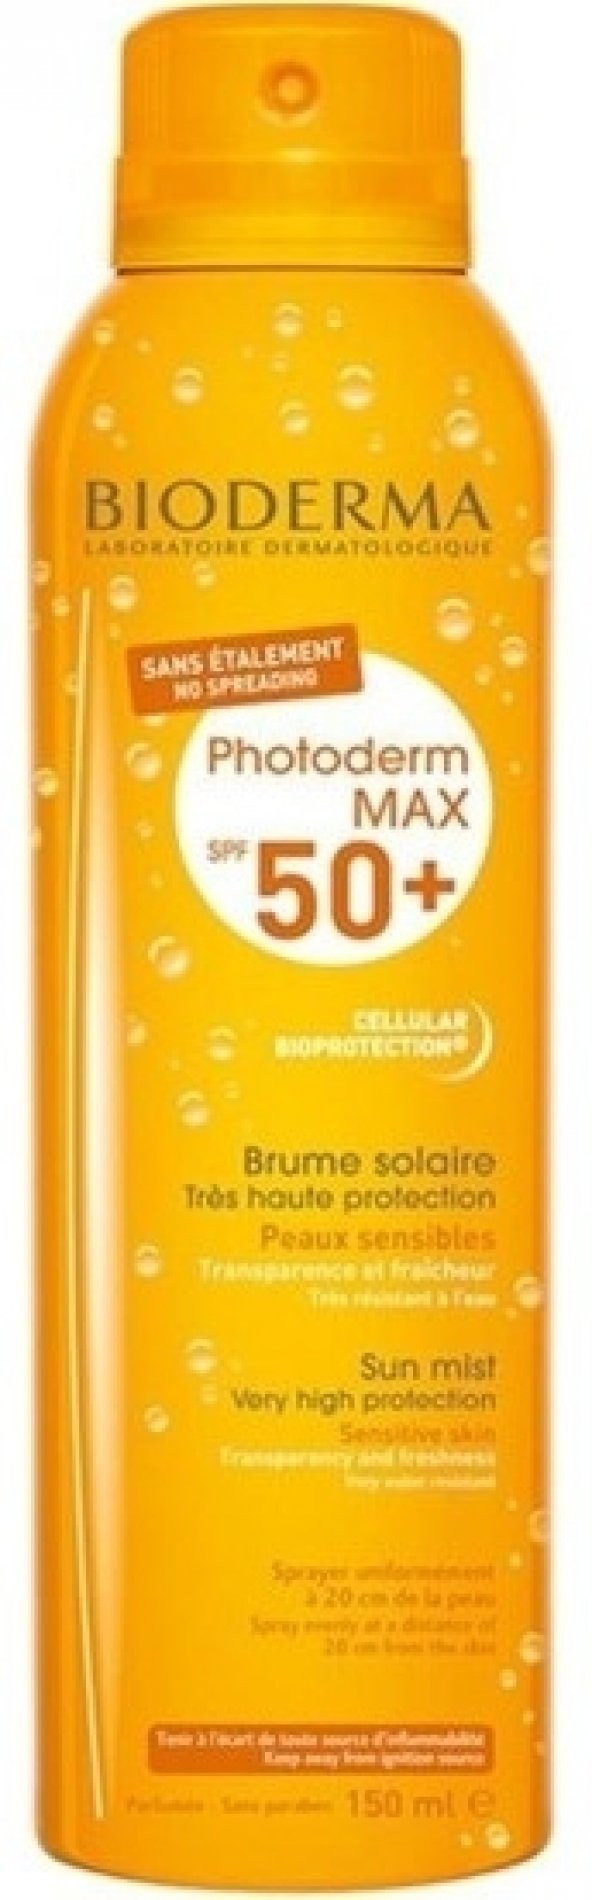 Bioderma Photoderm Max Sun Mist SPF 50+ 150ml SKT:08/2020